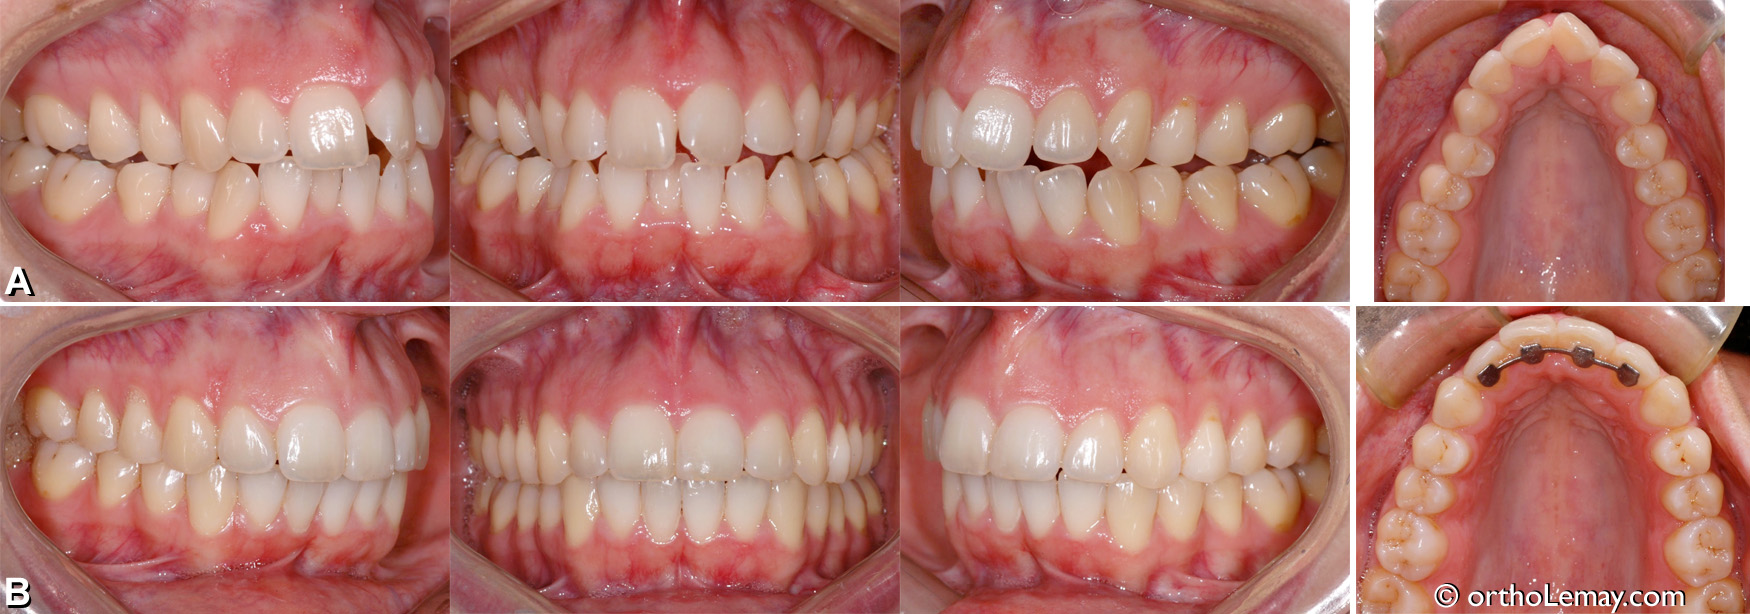 Malocclusion dentaire classse 1 orthodontie adulte expansion non chirurgicale sans EPRAC